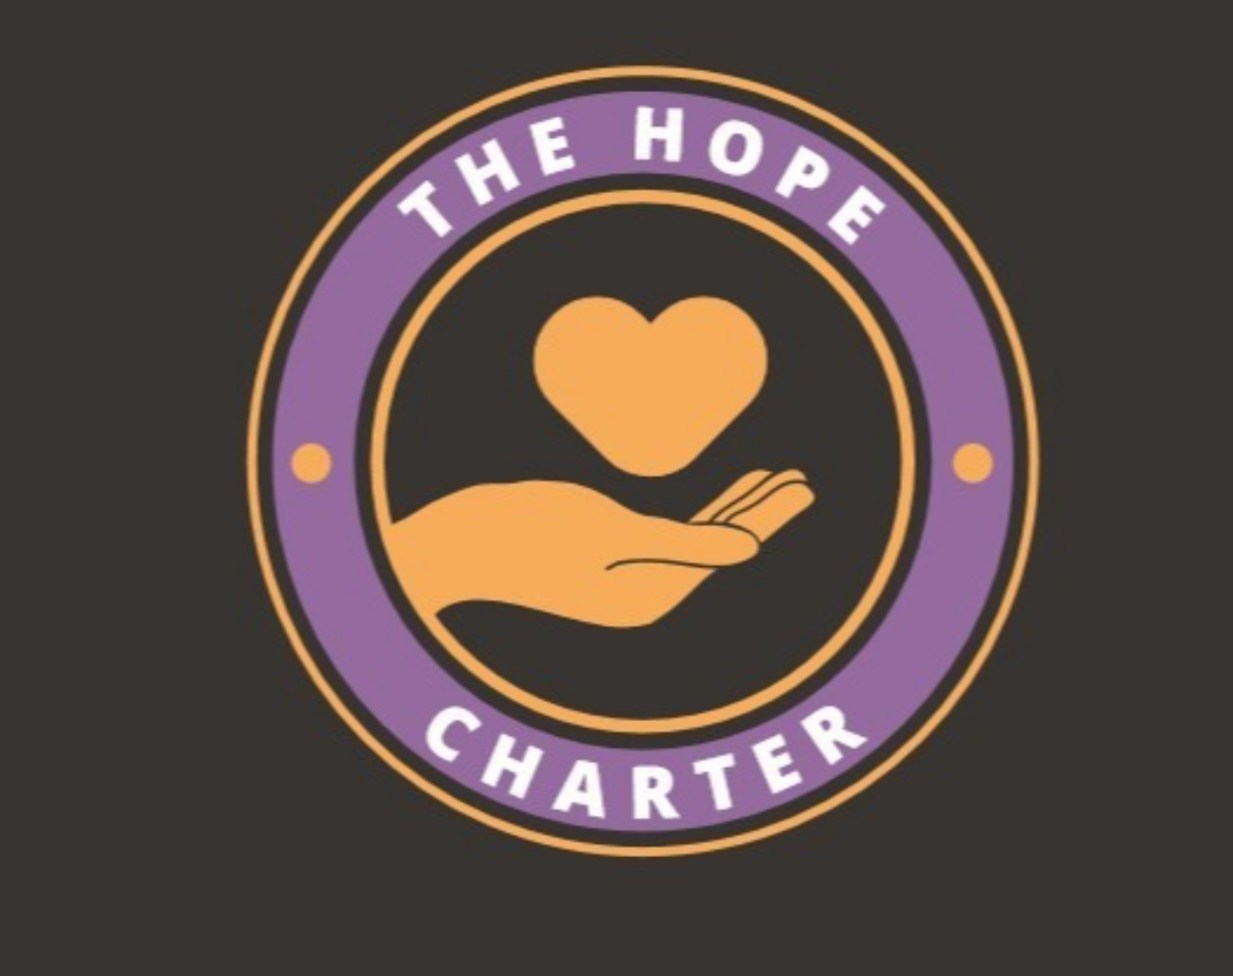 Hope Charter